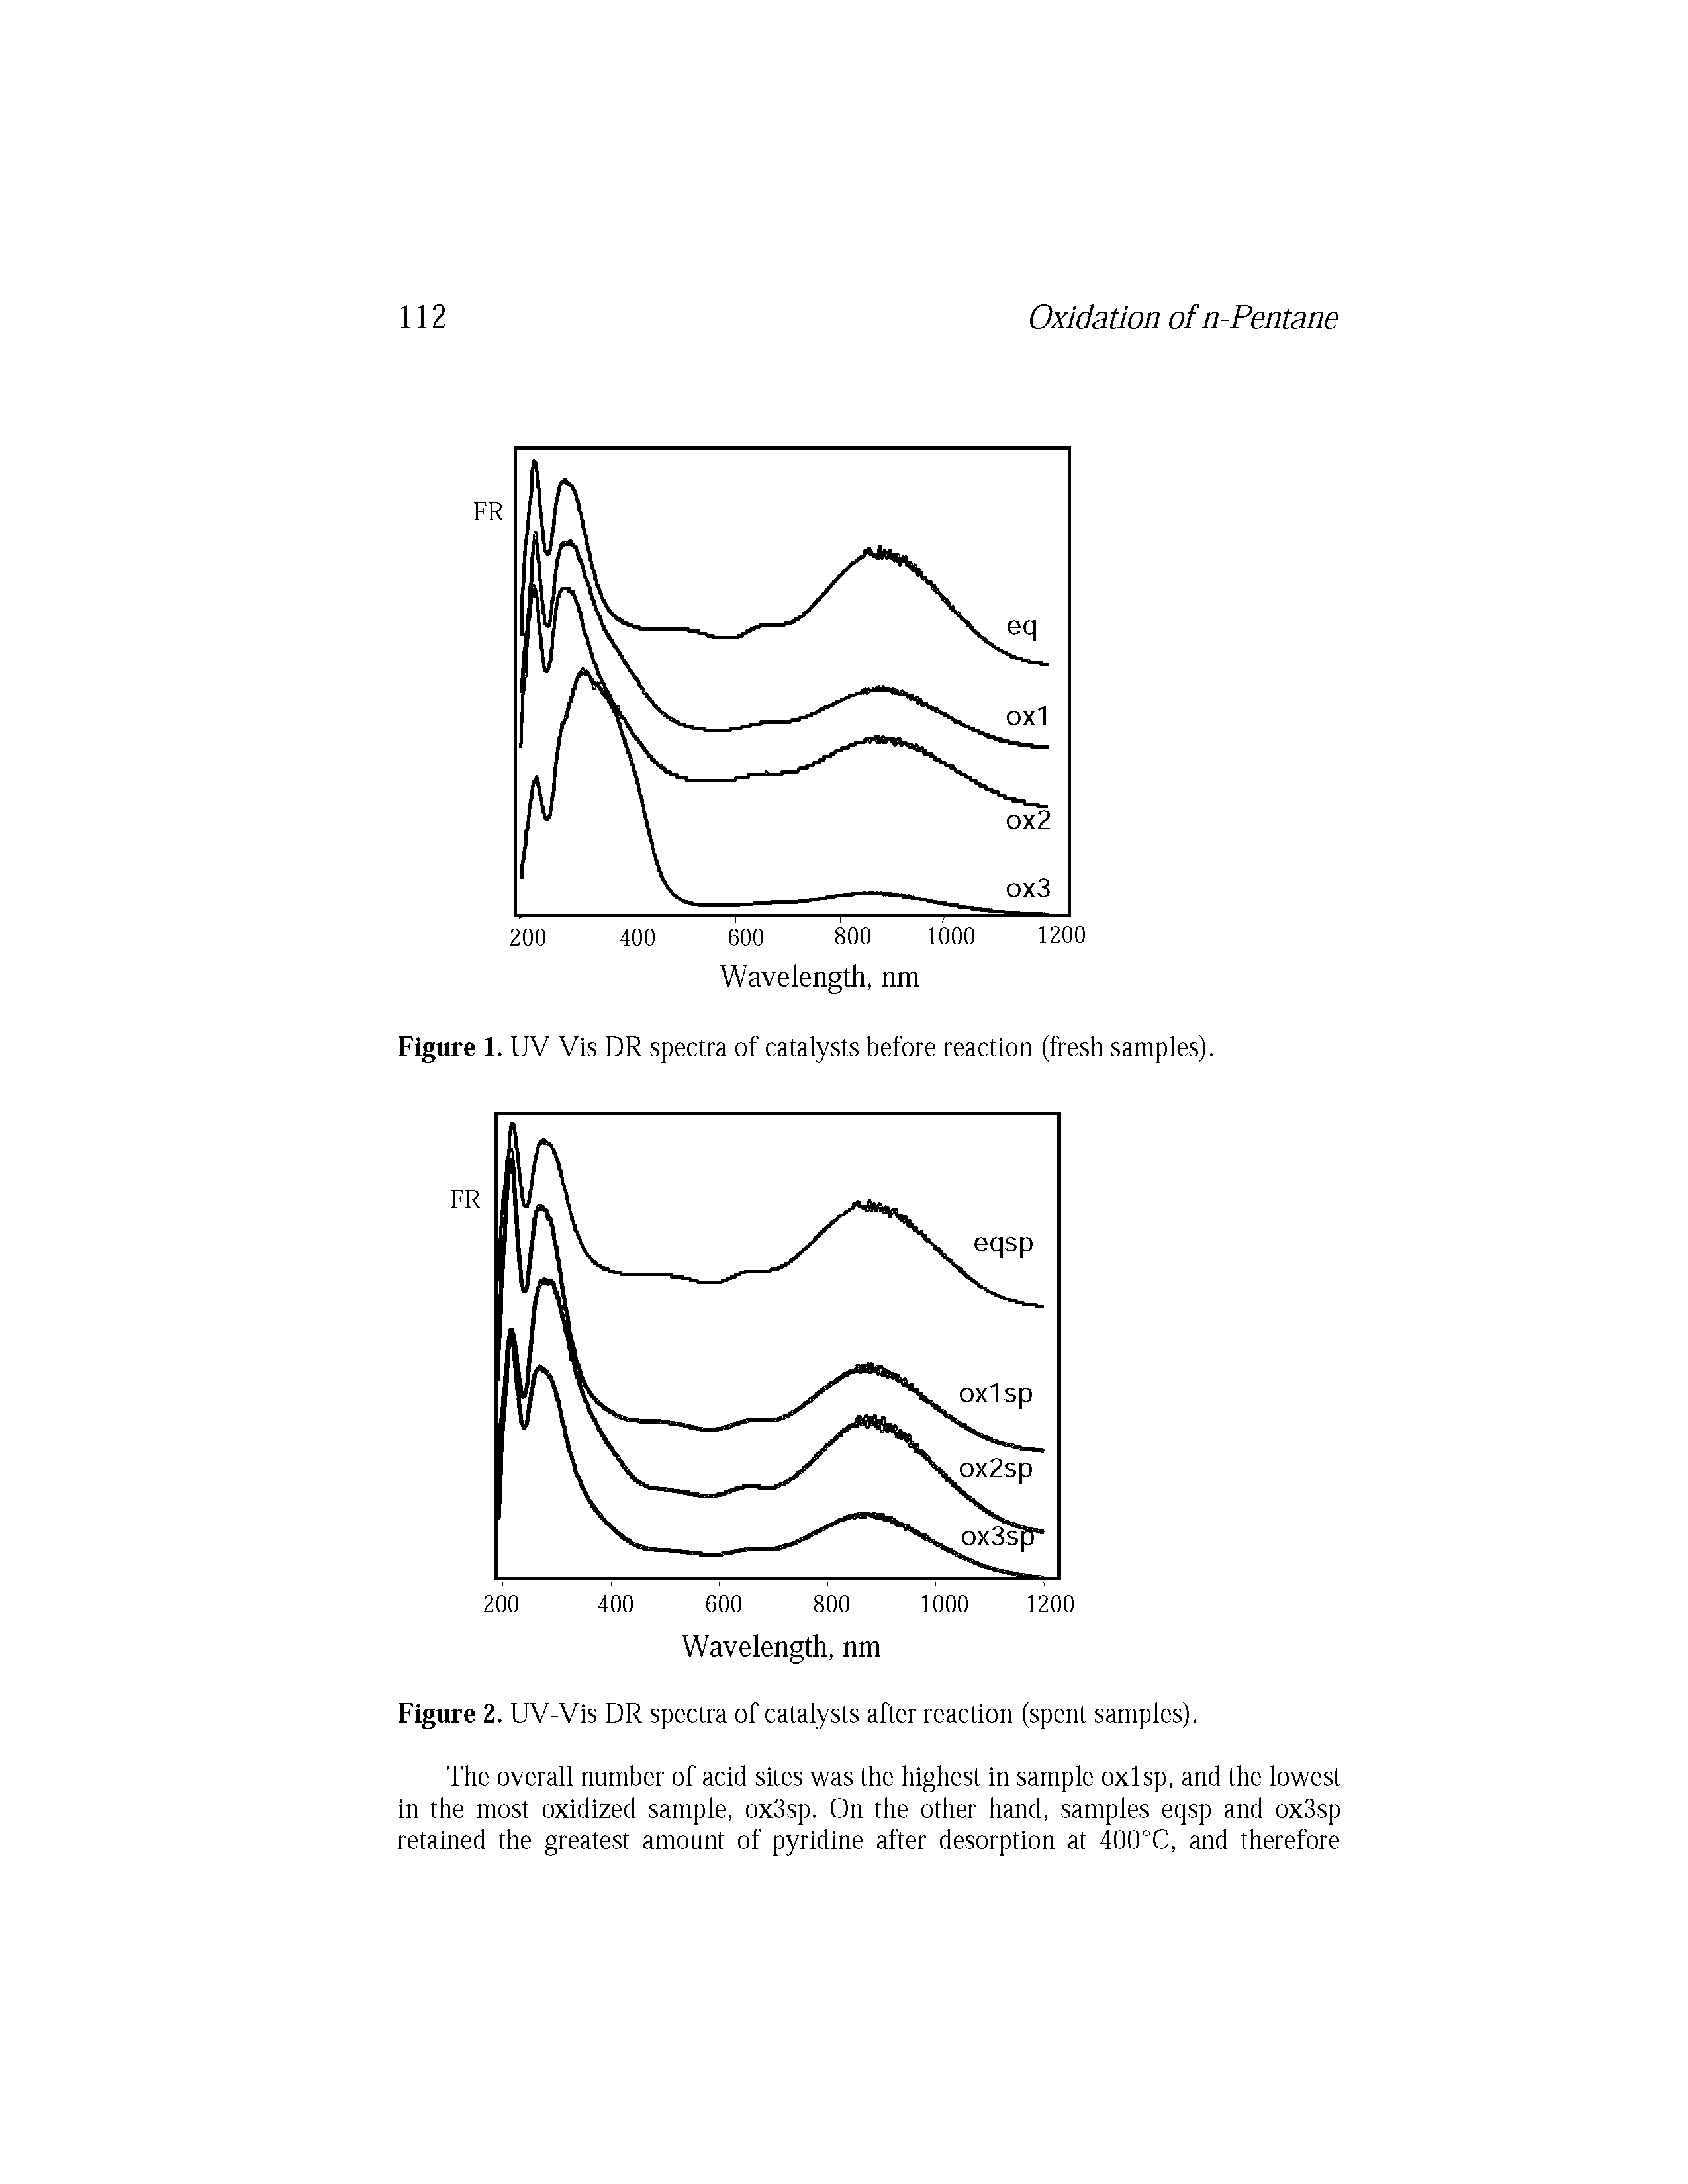 Figure 1. UV-Vis DR spectra of catalysts before reaction (fresh samples).